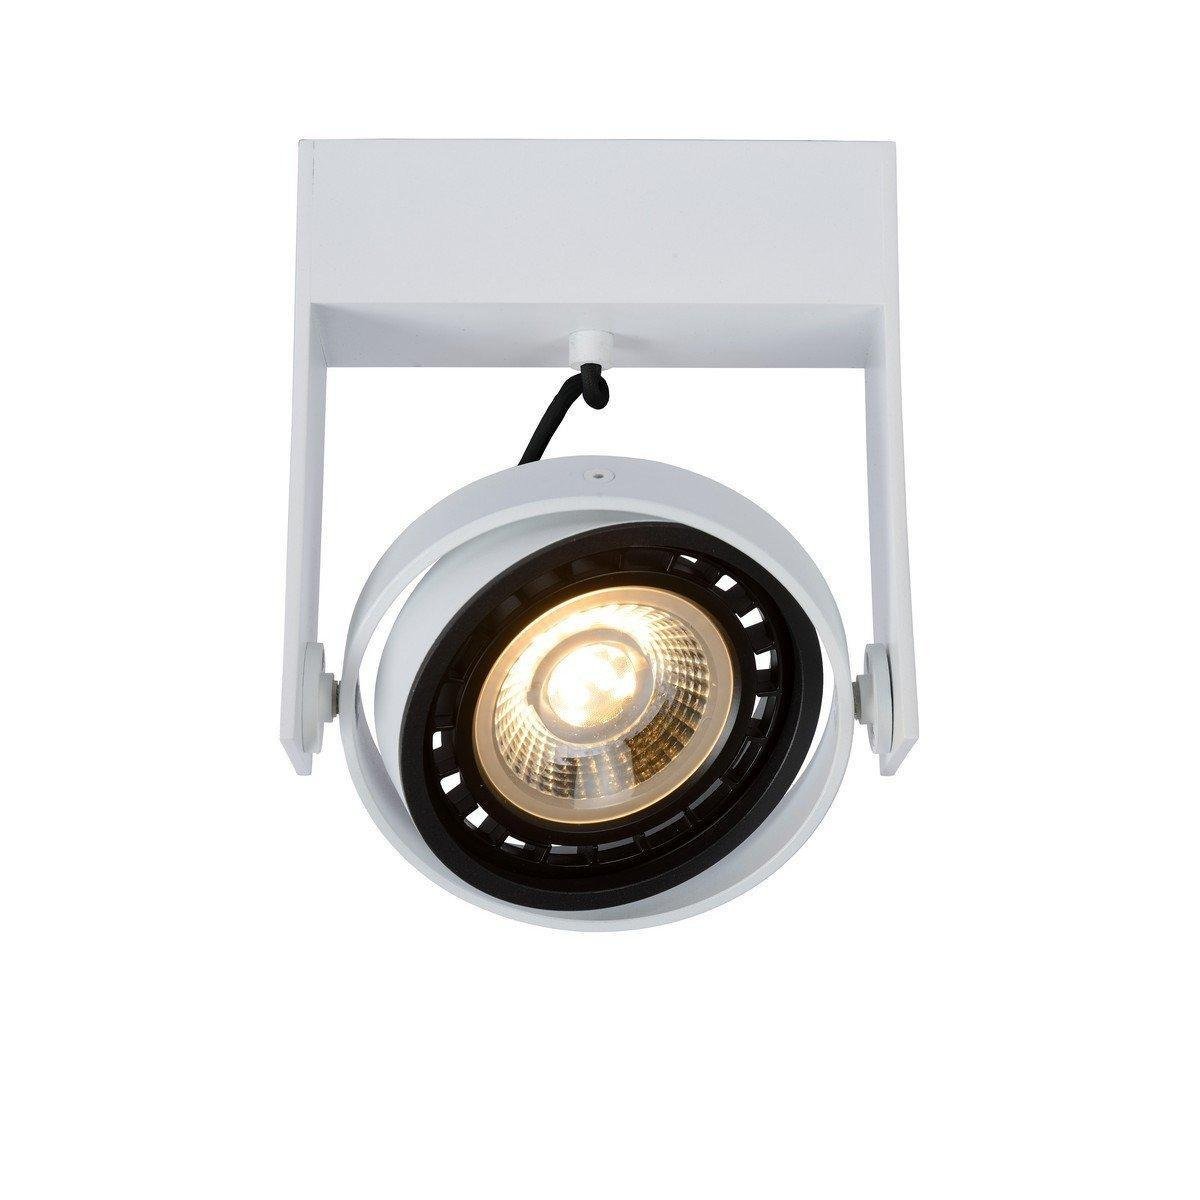 Lucide Griffon Modern Ceiling Spotlight LED Dim to warm GU10 1x12W 2200K3000K White - image 1